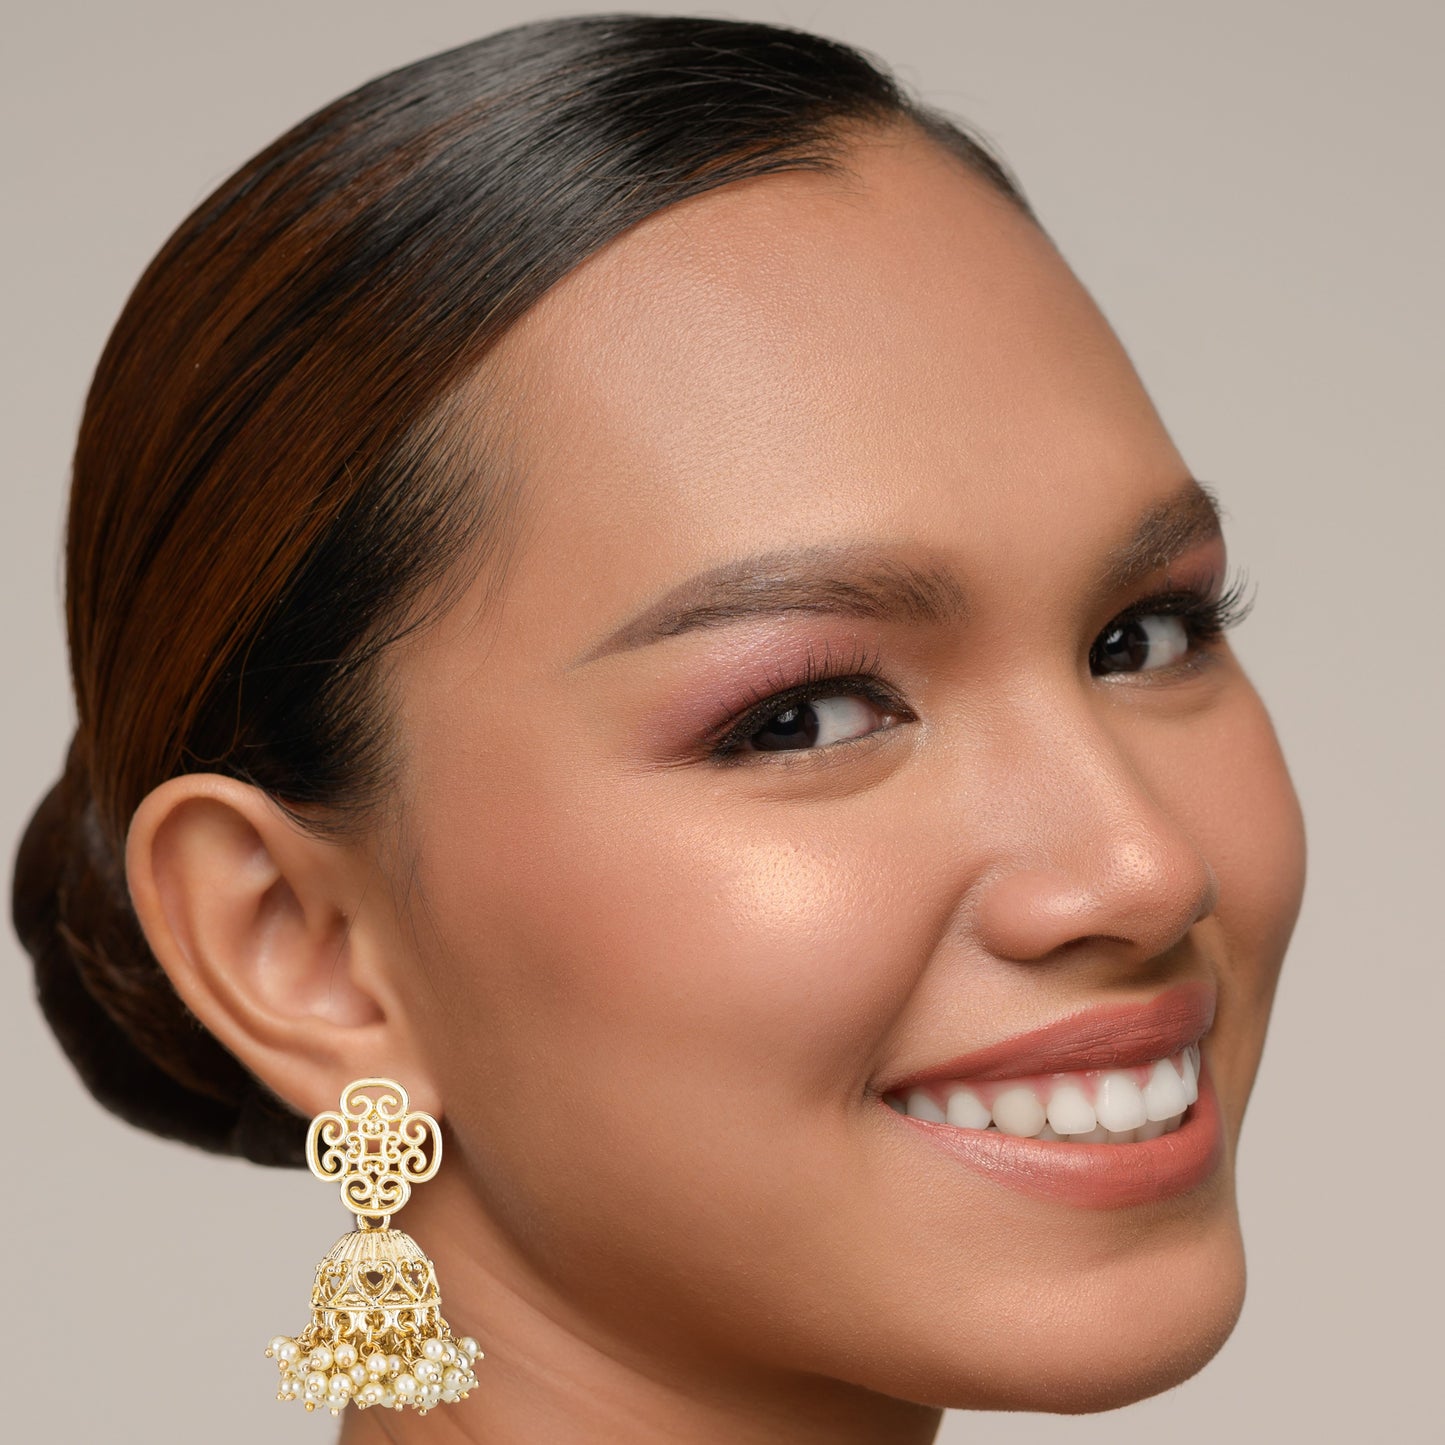 Bdiva 18K Gold Plated Meenakari Jhumka Earrings with Semi Cultured Pearls